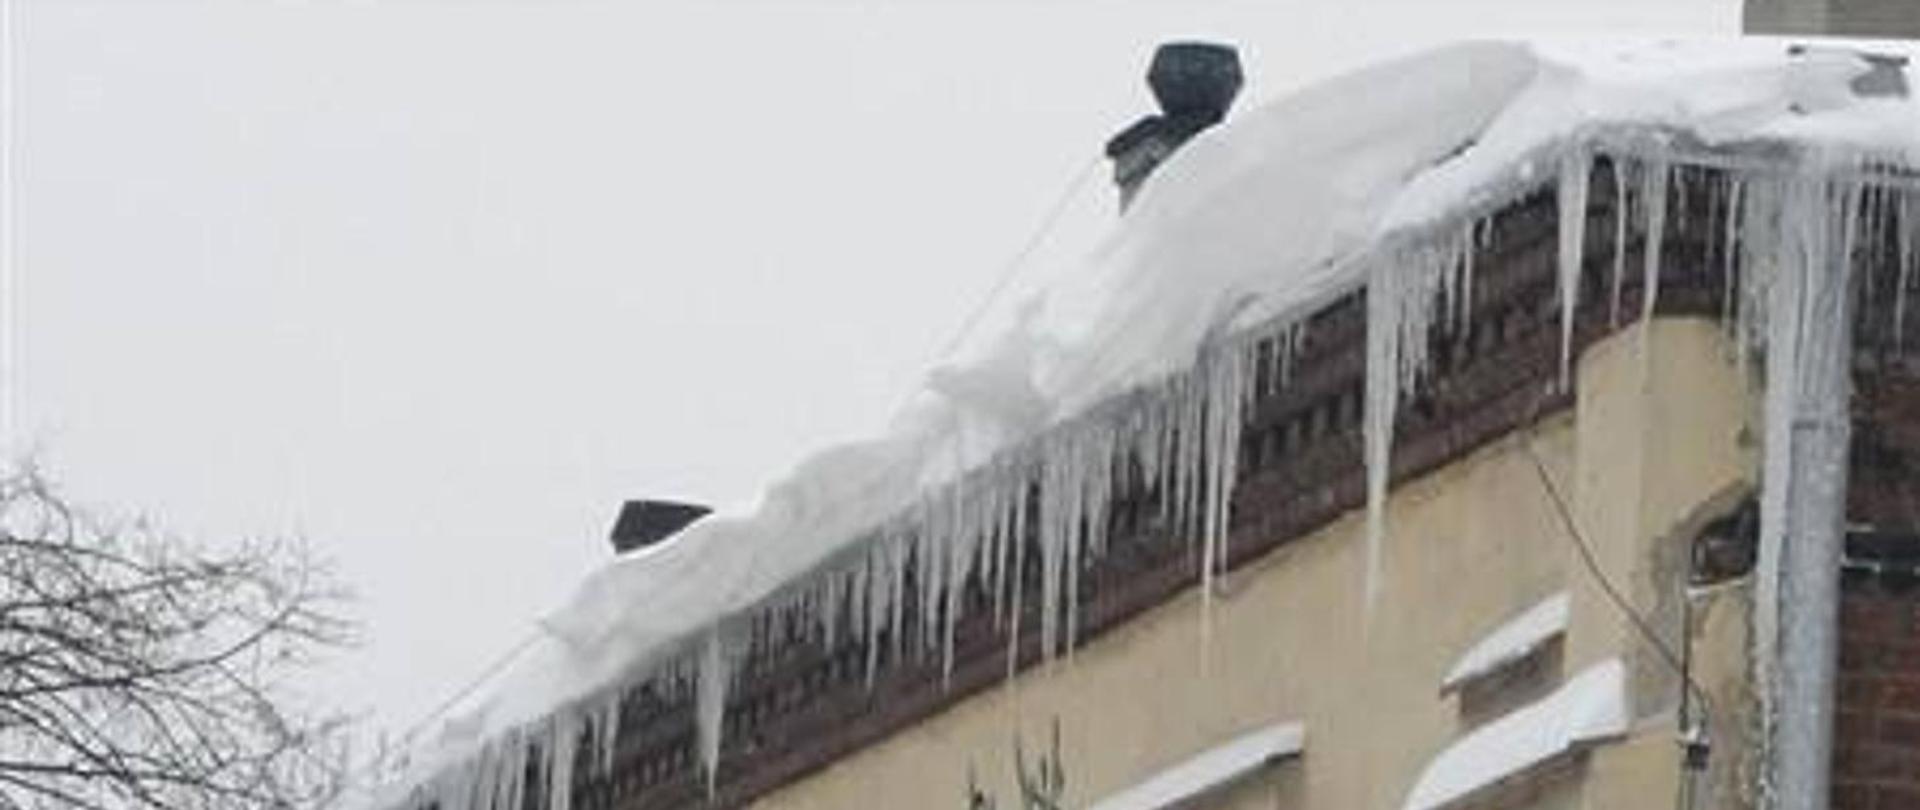 Zdjęcie obrazuje śnieg i sople na dachu budynku